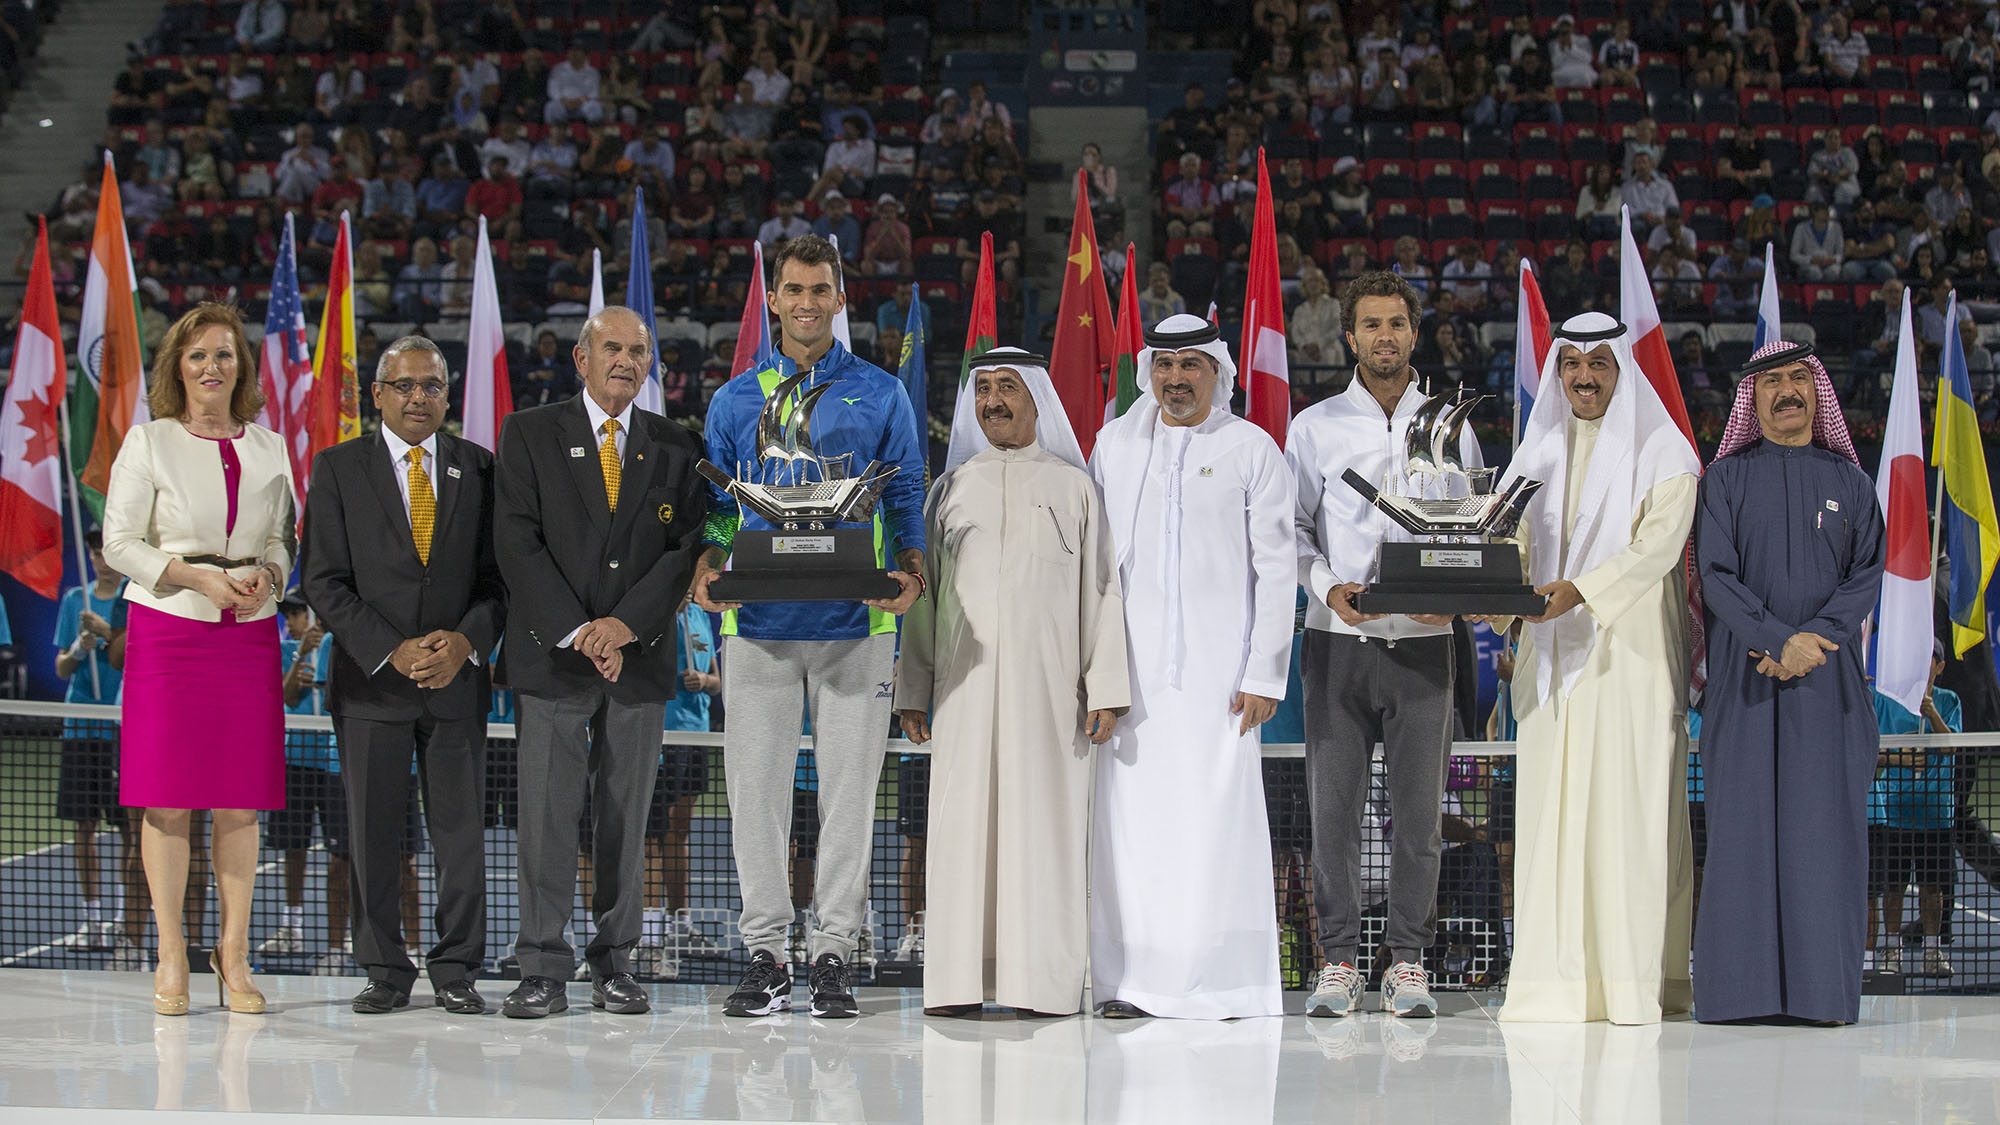 Rojer & Tecau win in Dubai Duty Free Tennis Championships 2017